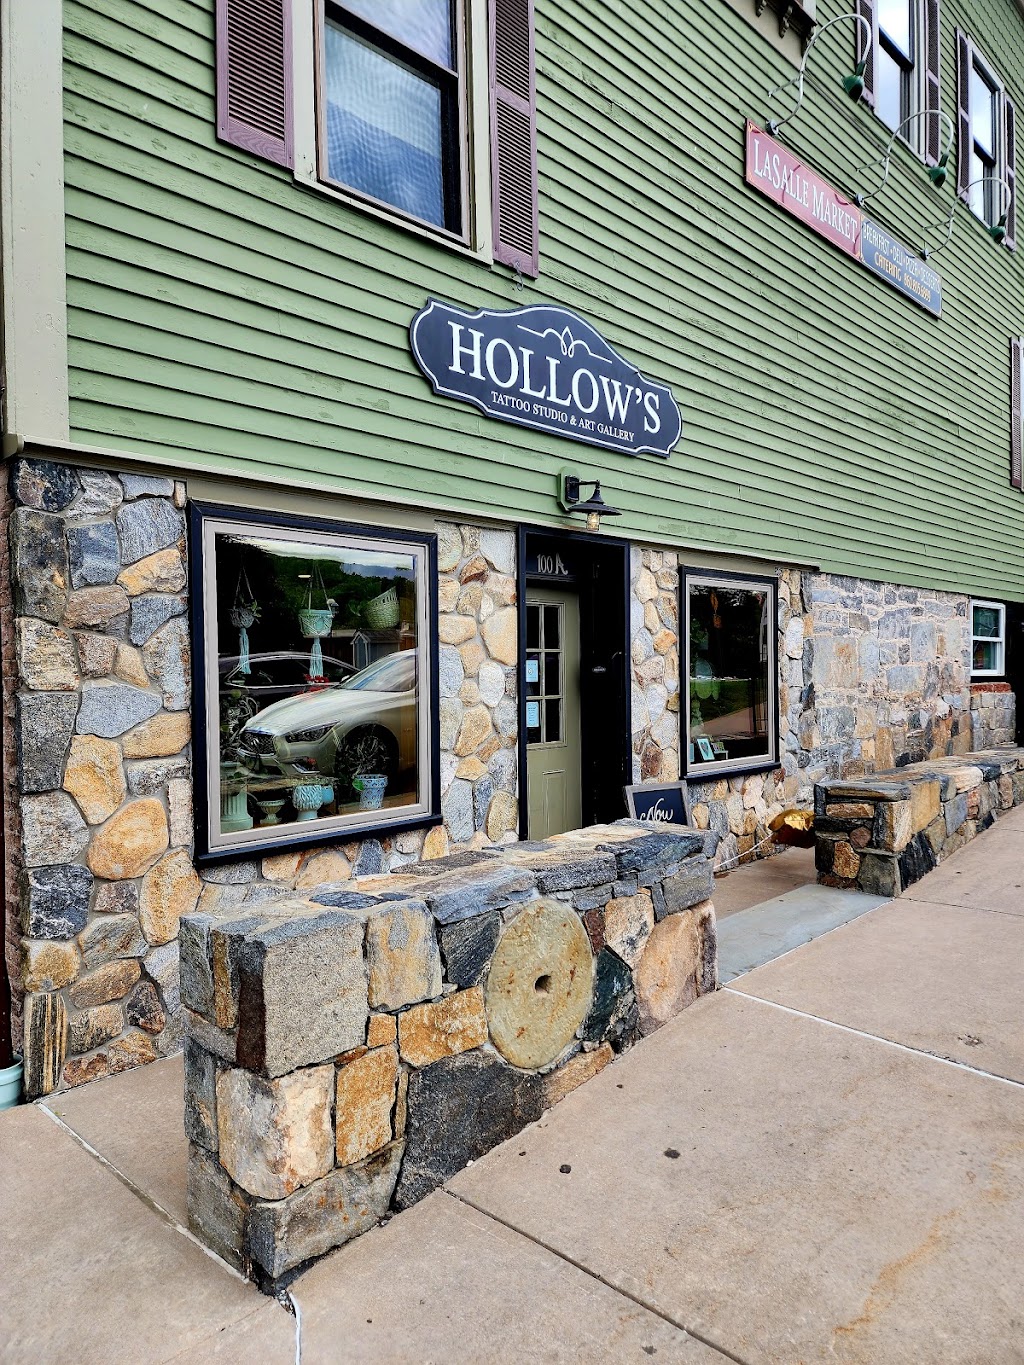 Hollows Tattoo Studio & Art Gallery | 100A Main St, Collinsville, CT 06019 | Phone: (860) 840-7373